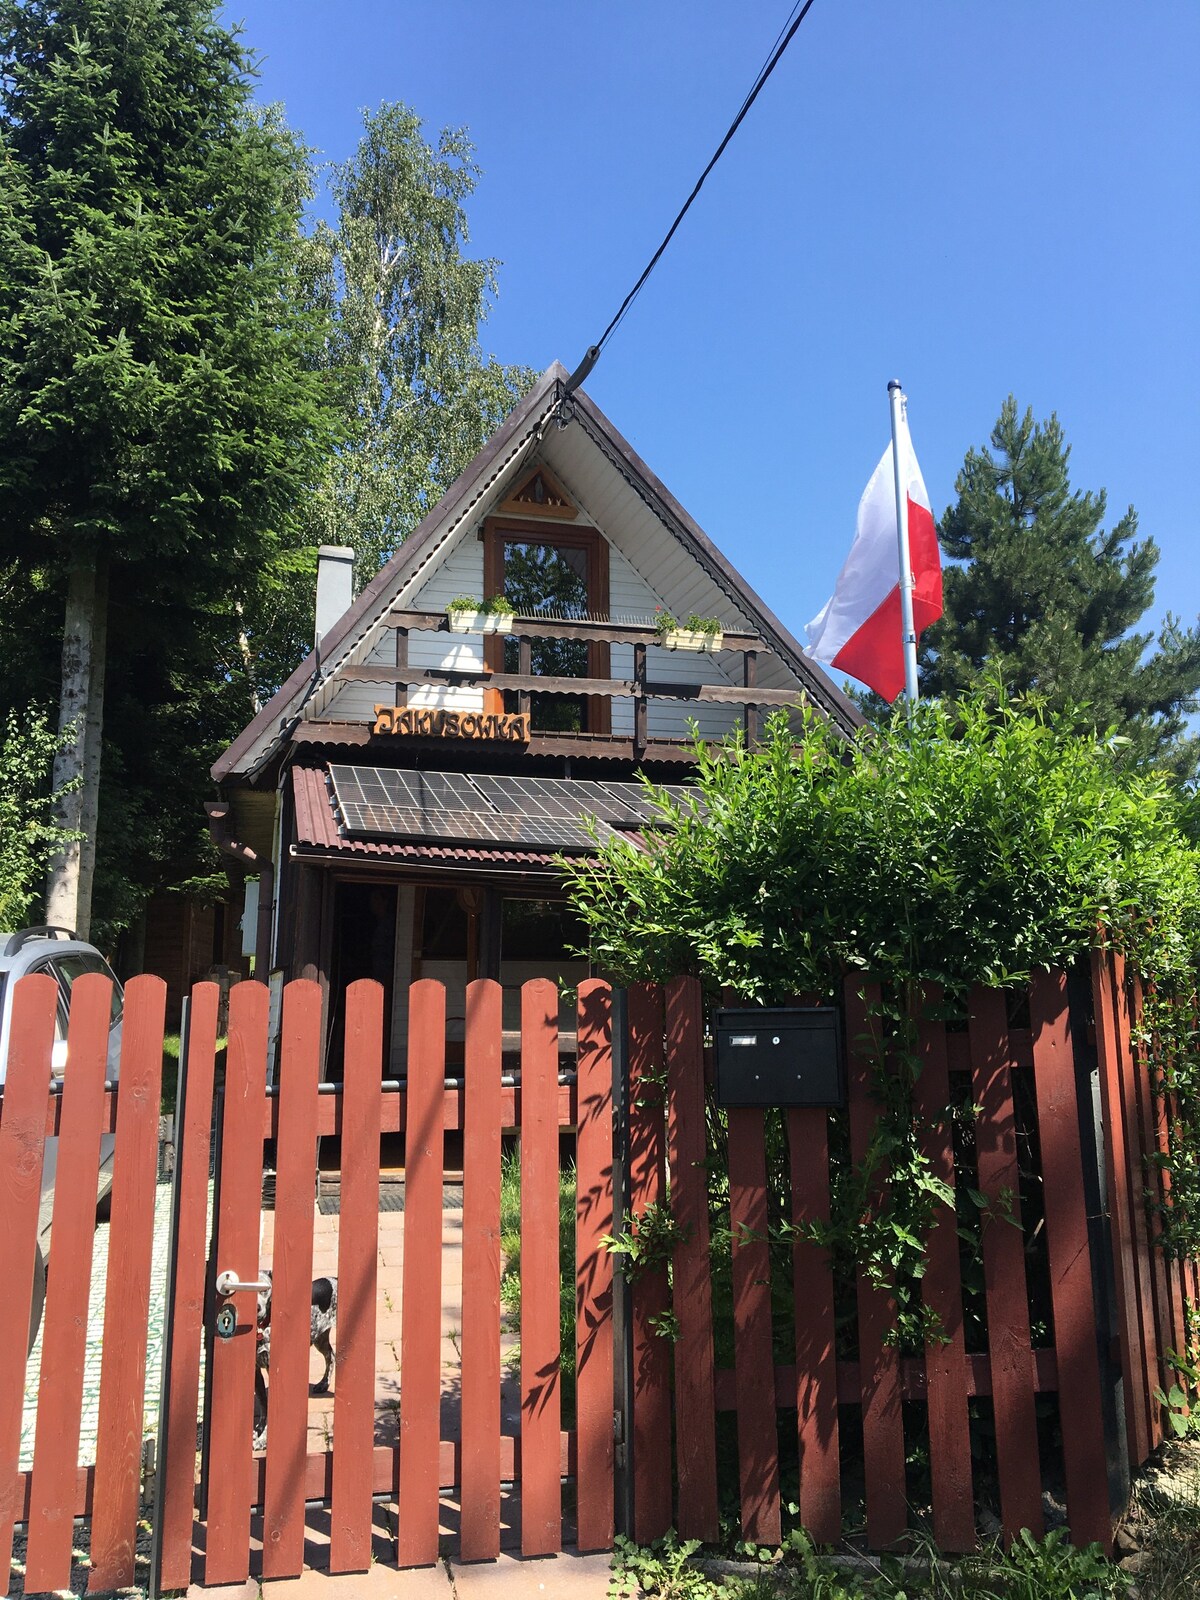 The Jakusówka  House  in the heart of the Beskids